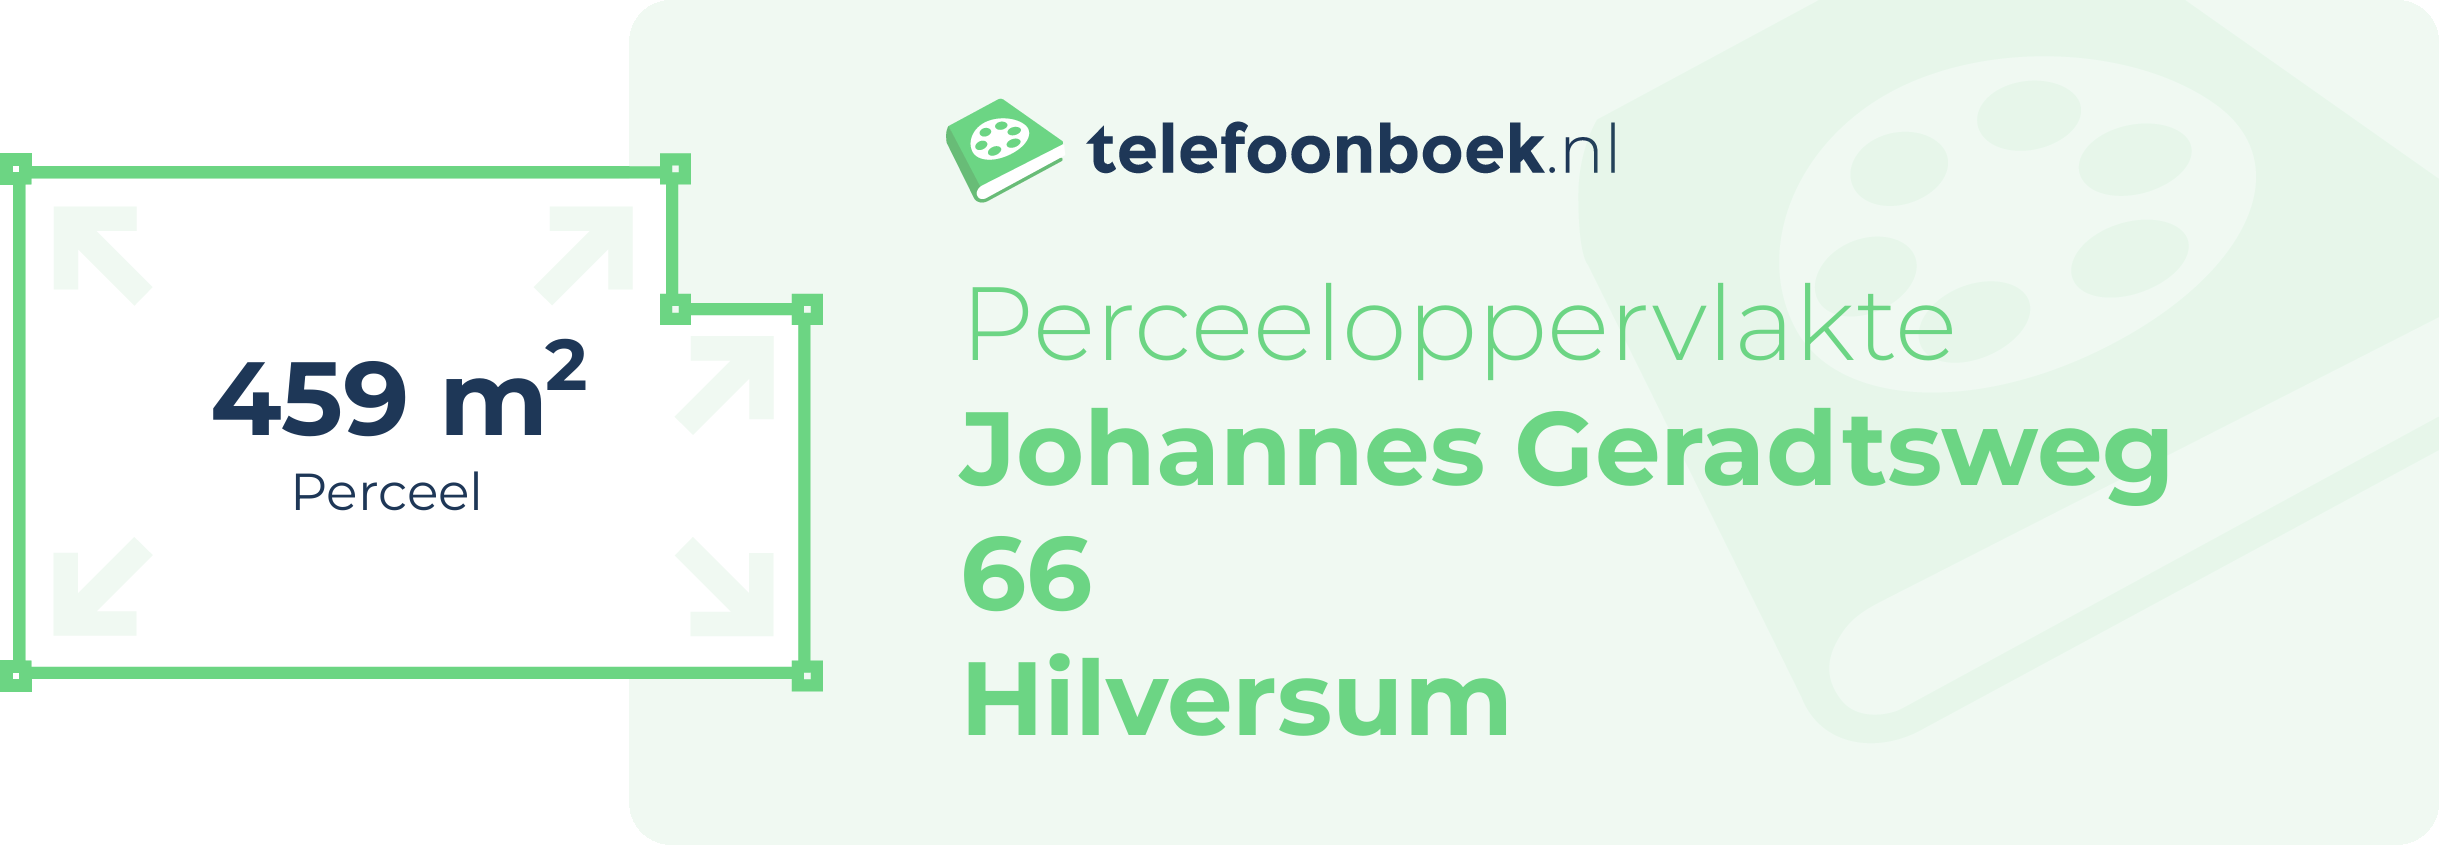 Perceeloppervlakte Johannes Geradtsweg 66 Hilversum